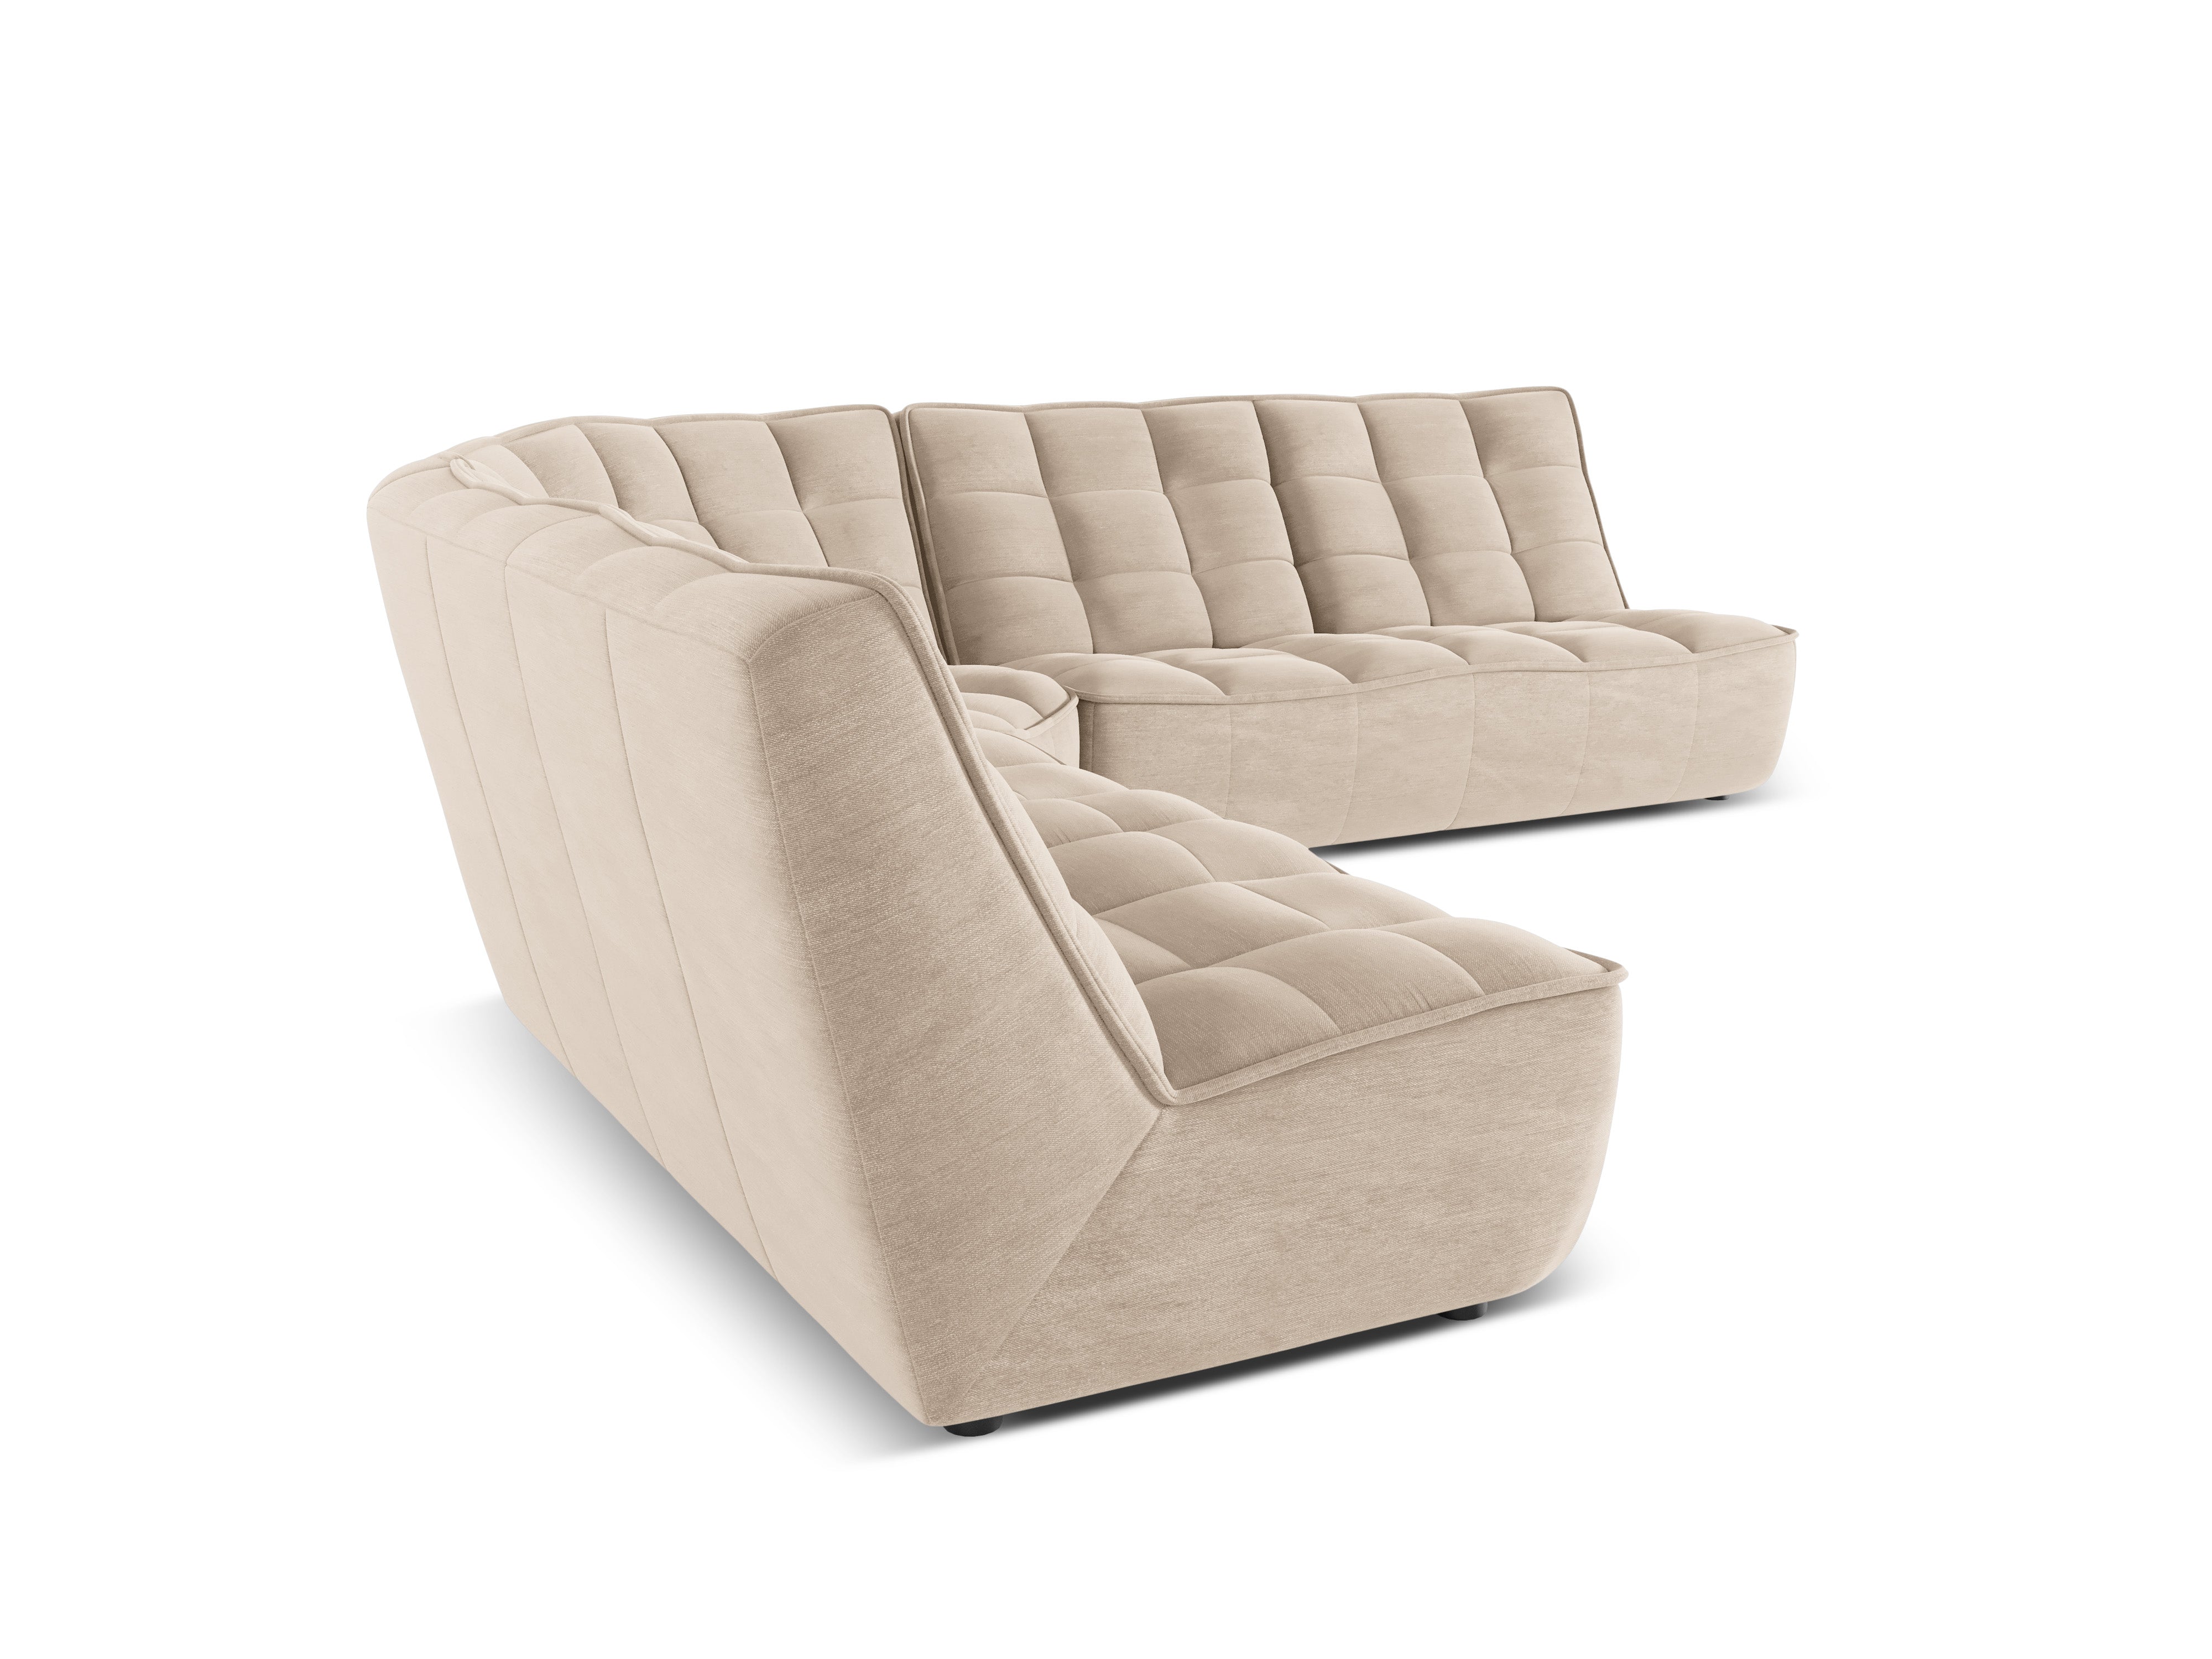 Symmetrical Modular Corner Sofa, "Moni", 6 Seats, 284x284x91
Made in Europe, Maison Heritage, Eye on Design